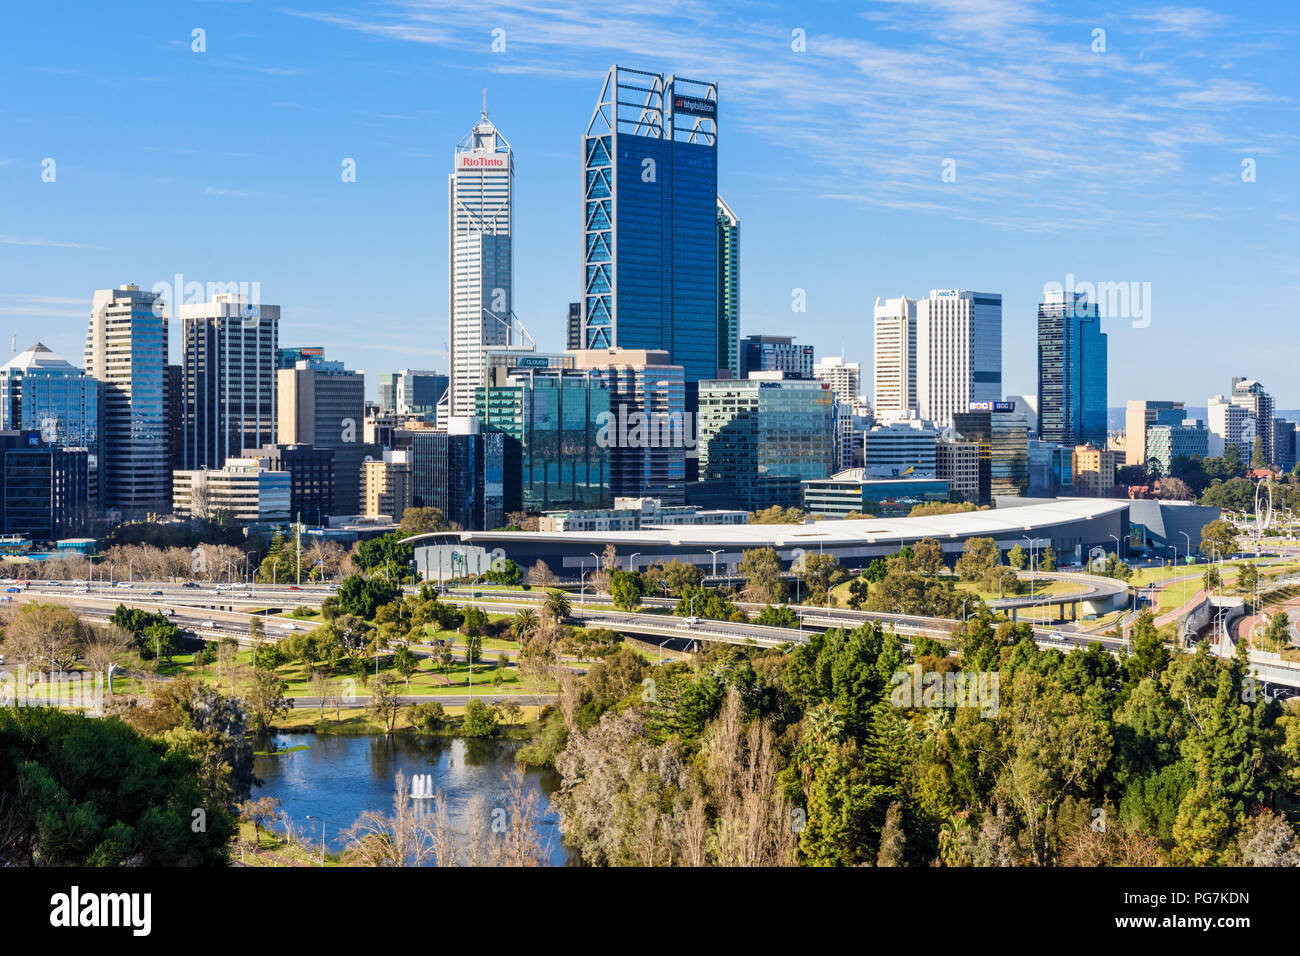 Skyline cityscape of the City of Perth, Western Australia, Australia Stock Photo